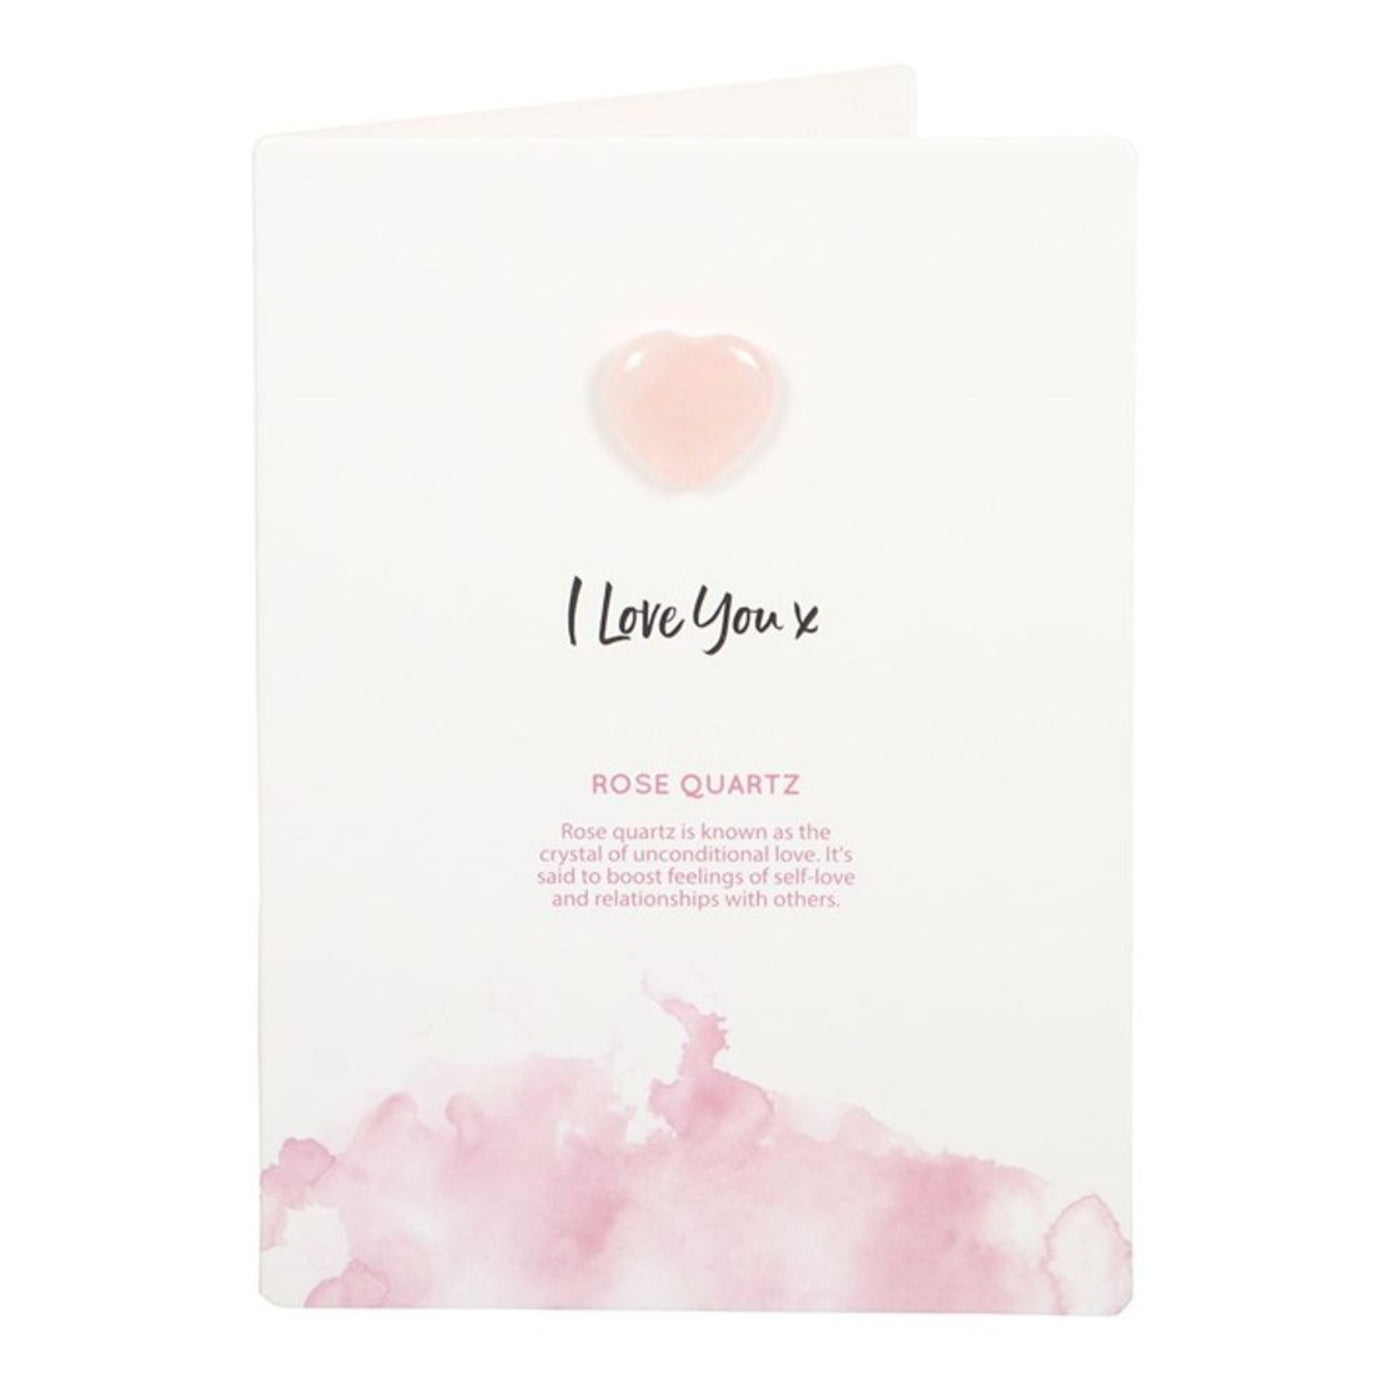 I Love You Rose Quartz Gemstone Heart On A Greeting Card.